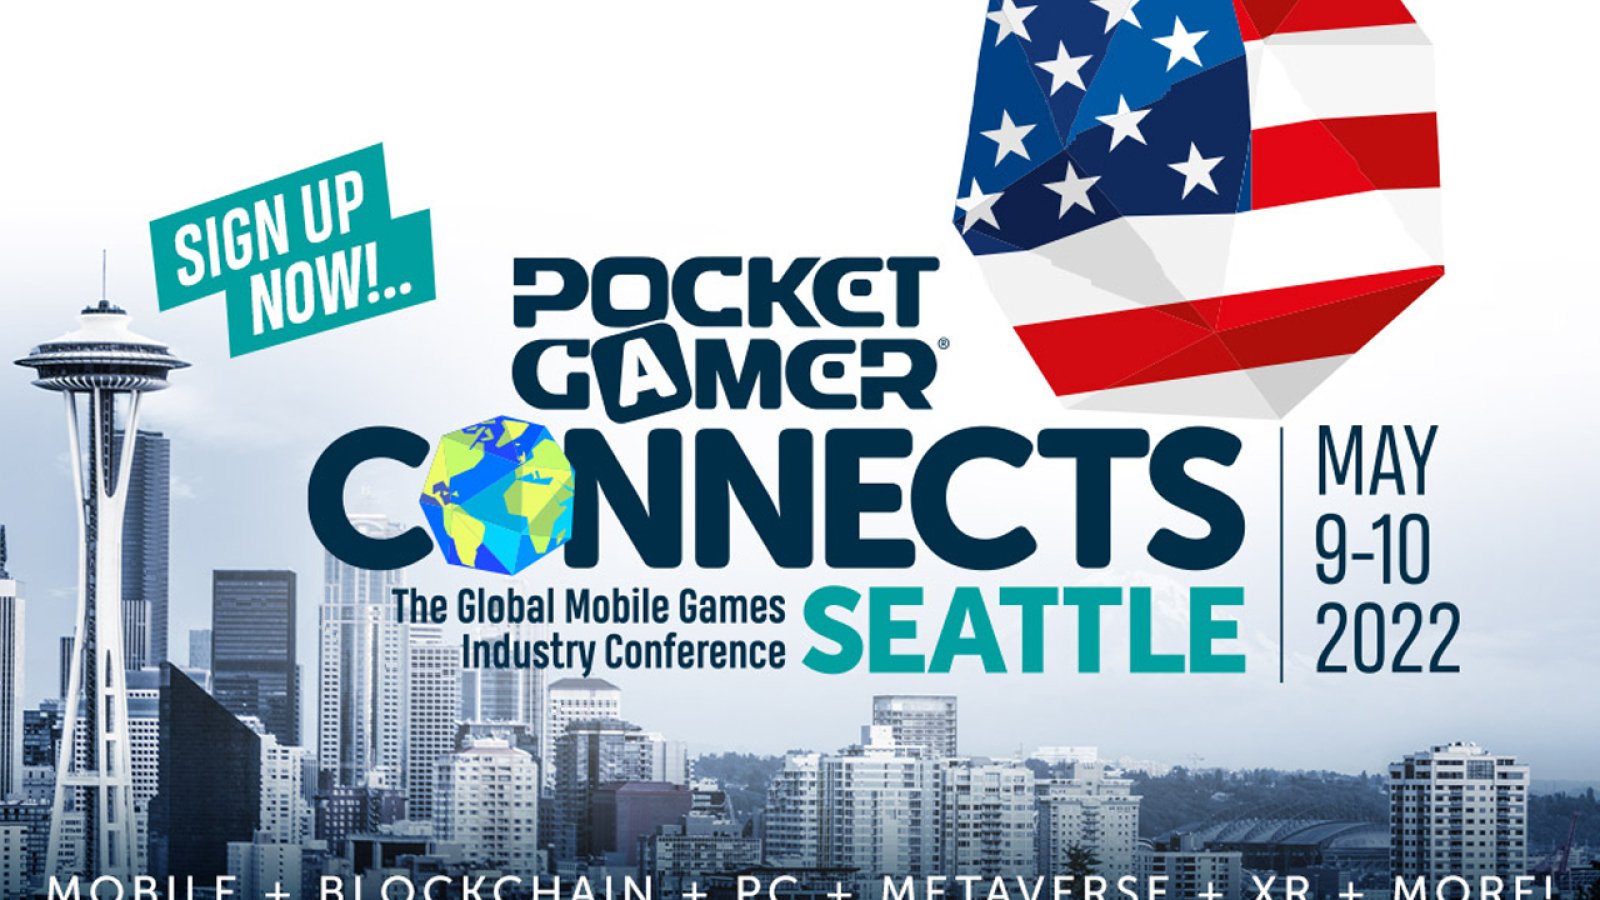 Blockchain Games Next Summit at PGC Seattle 2022